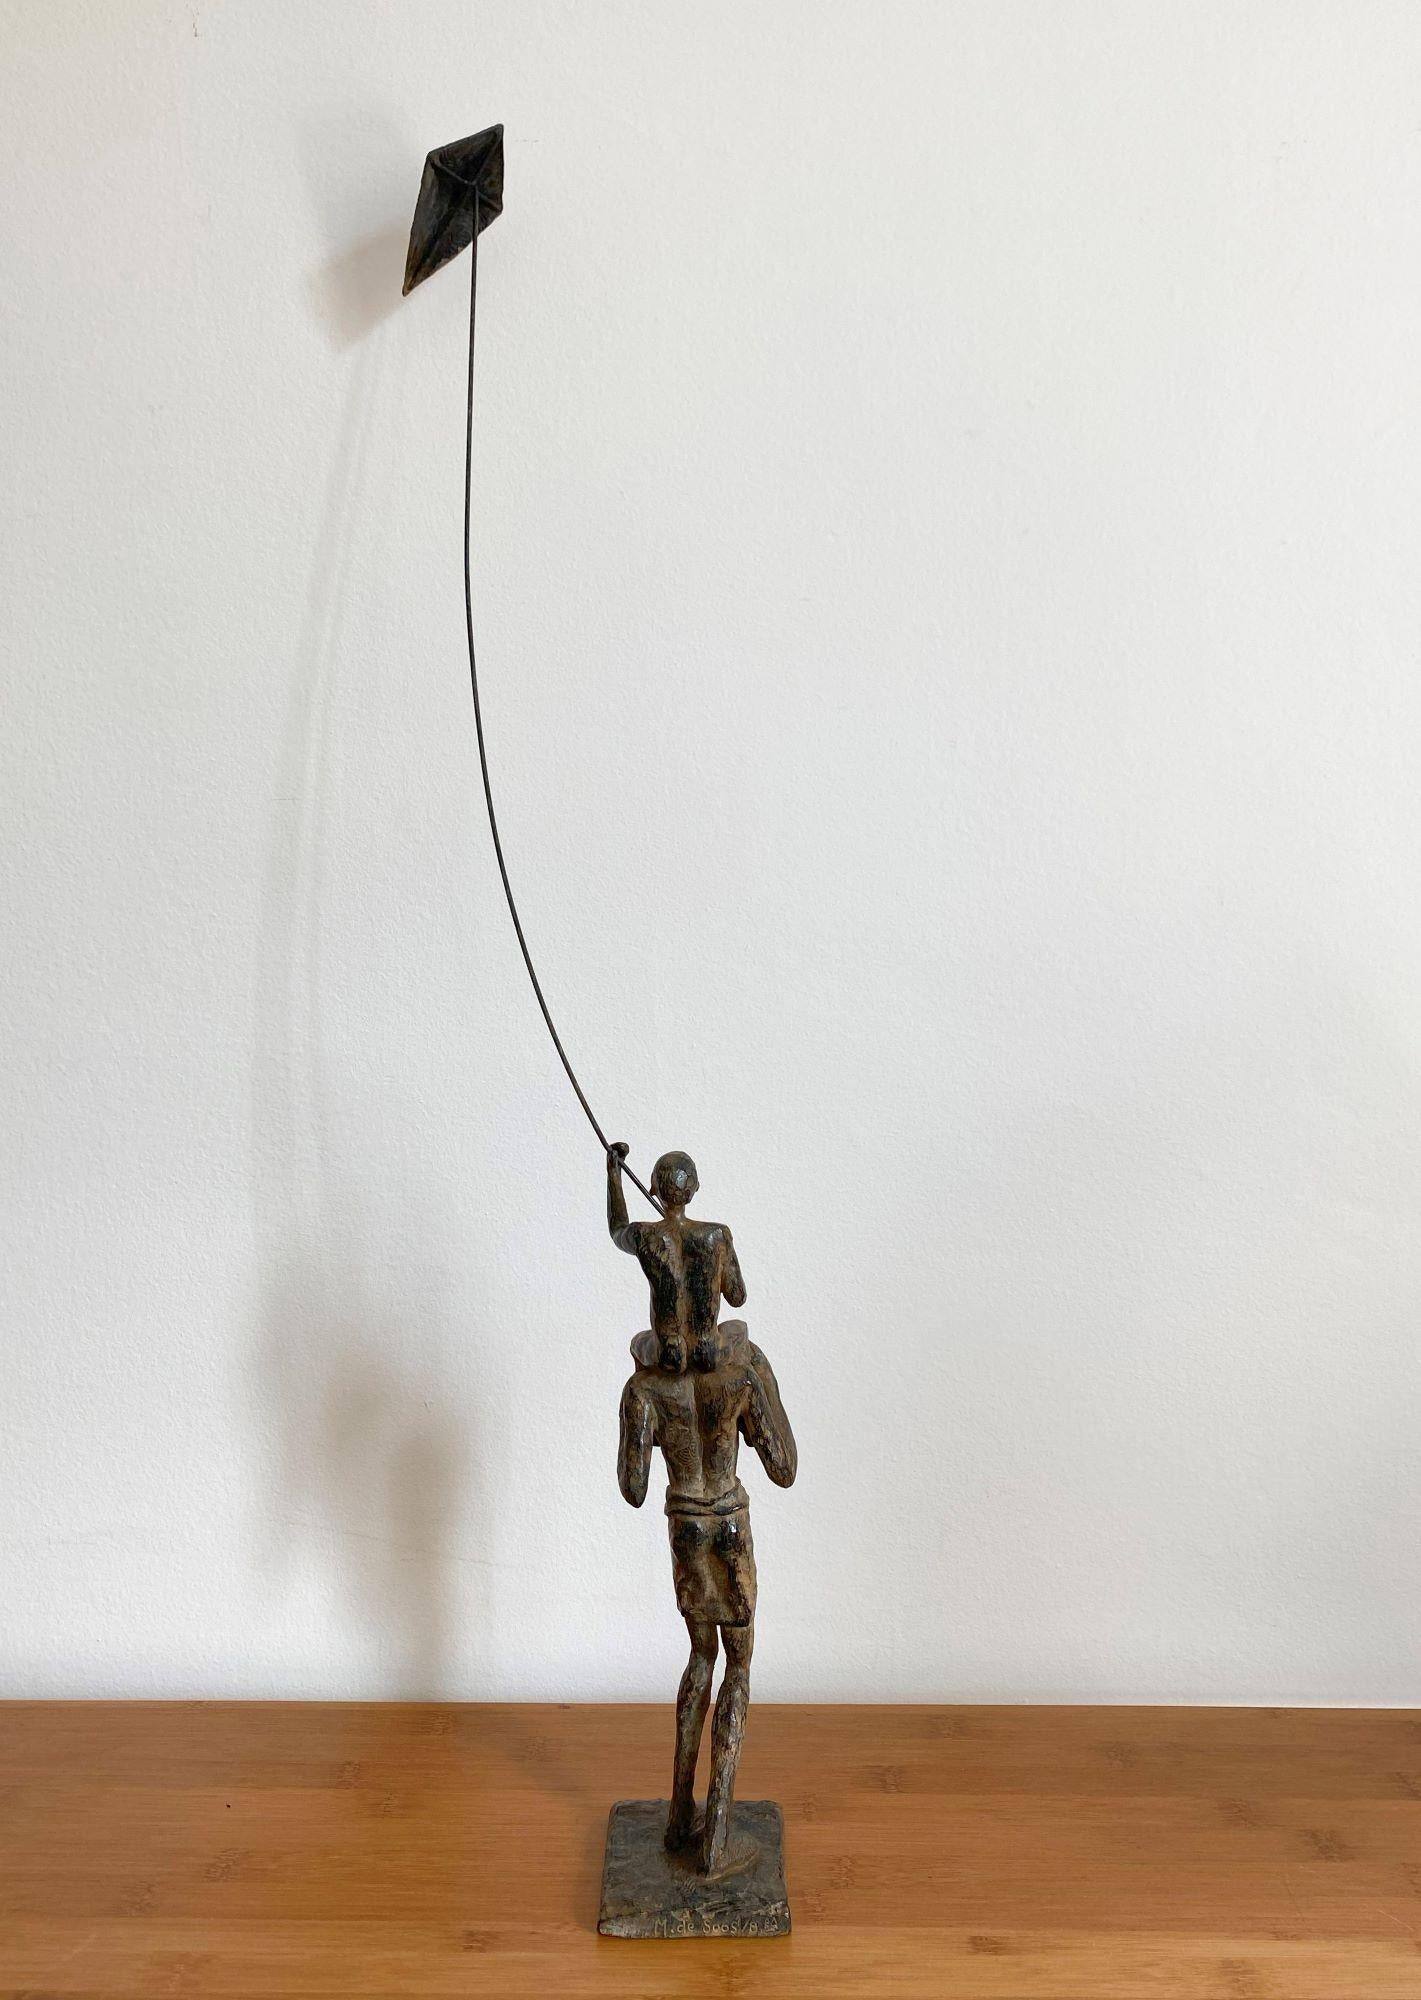 Childhood’s Sail VI by Marine de Soos - Bronze sculpture, child's figure, kite For Sale 2